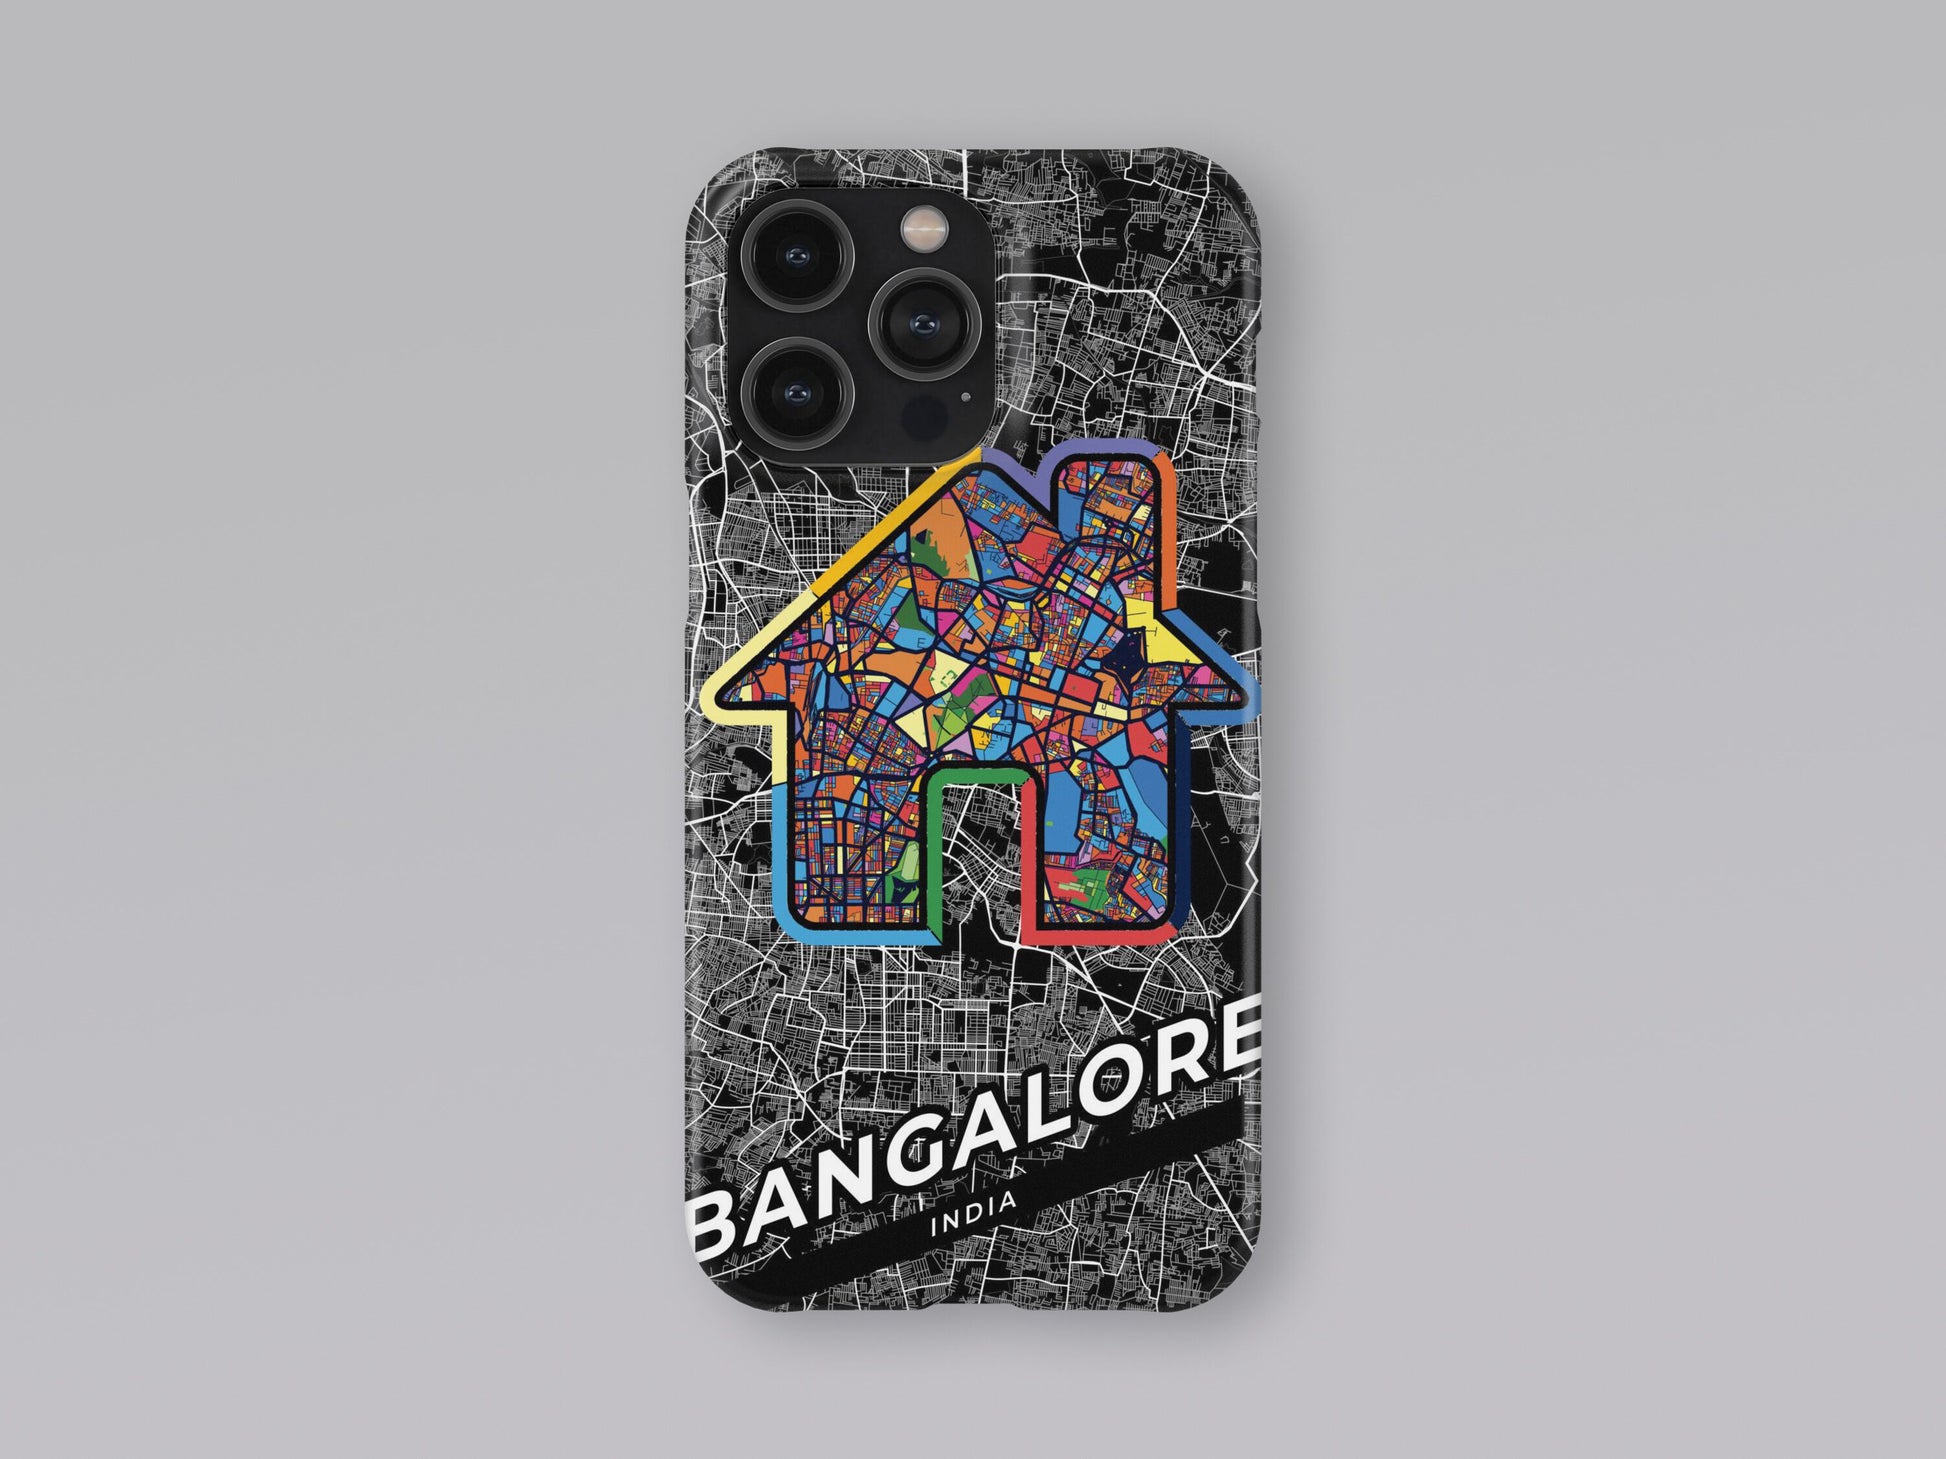 Bangalore India slim phone case with colorful icon. Birthday, wedding or housewarming gift. Couple match cases. 3